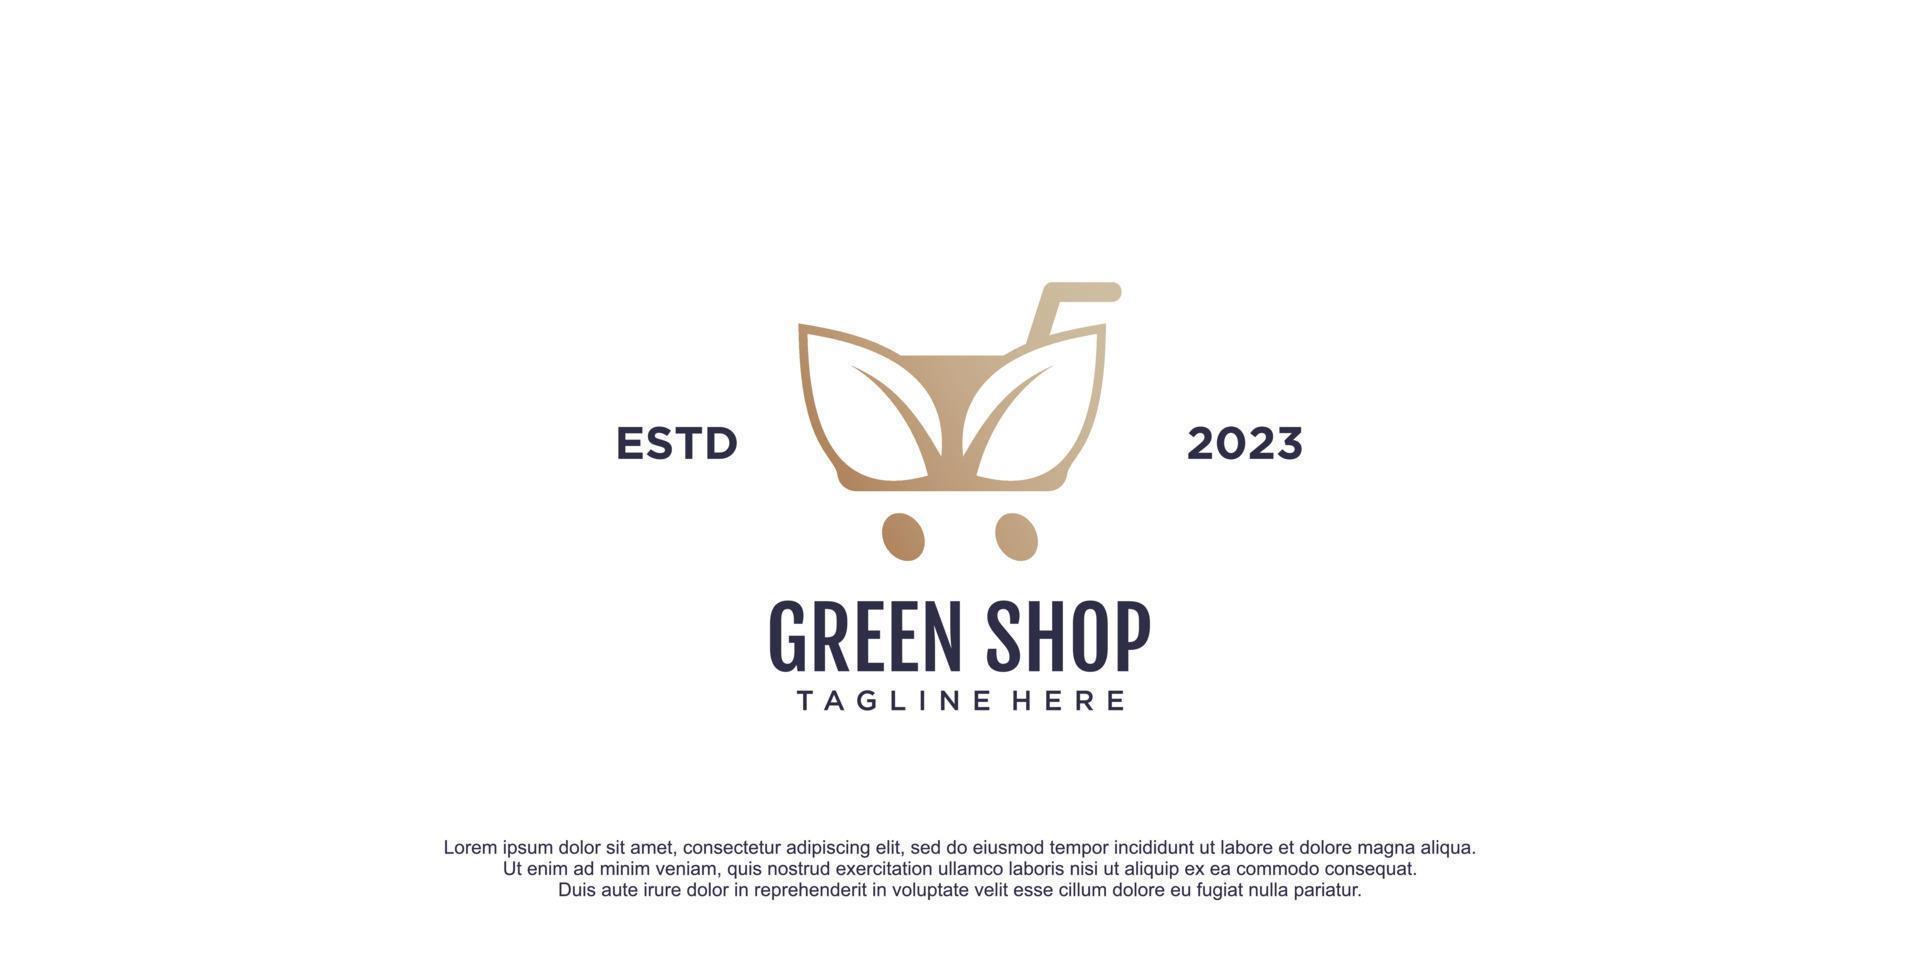 Green shop logo with trolley concept design icon vector illustration